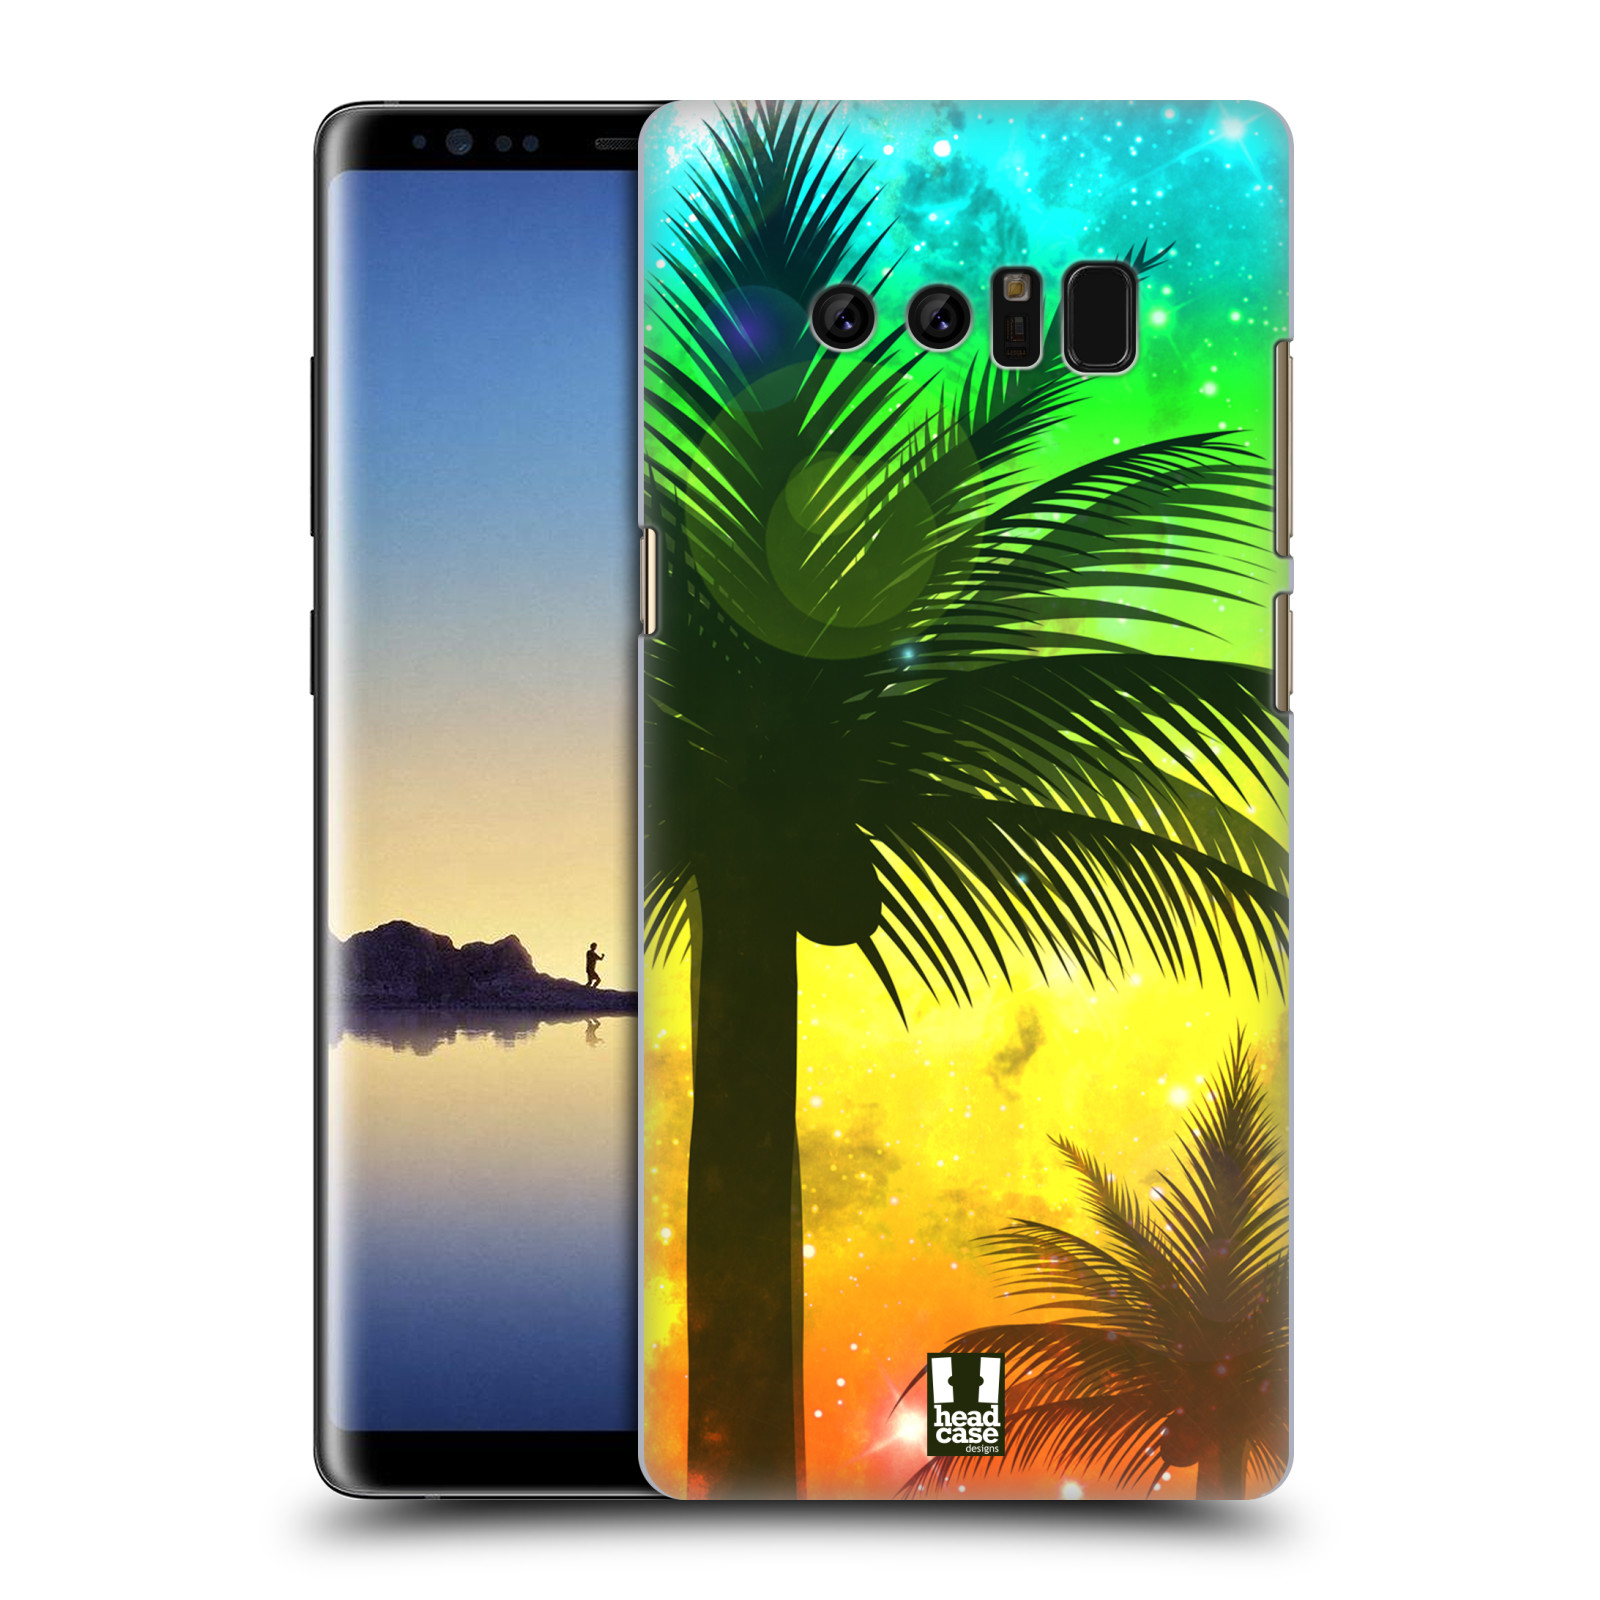 HEAD CASE plastový obal na mobil Samsung Galaxy Note 8 vzor Kreslený motiv silueta moře a palmy ZELENÁ A ORANŽOVÁ